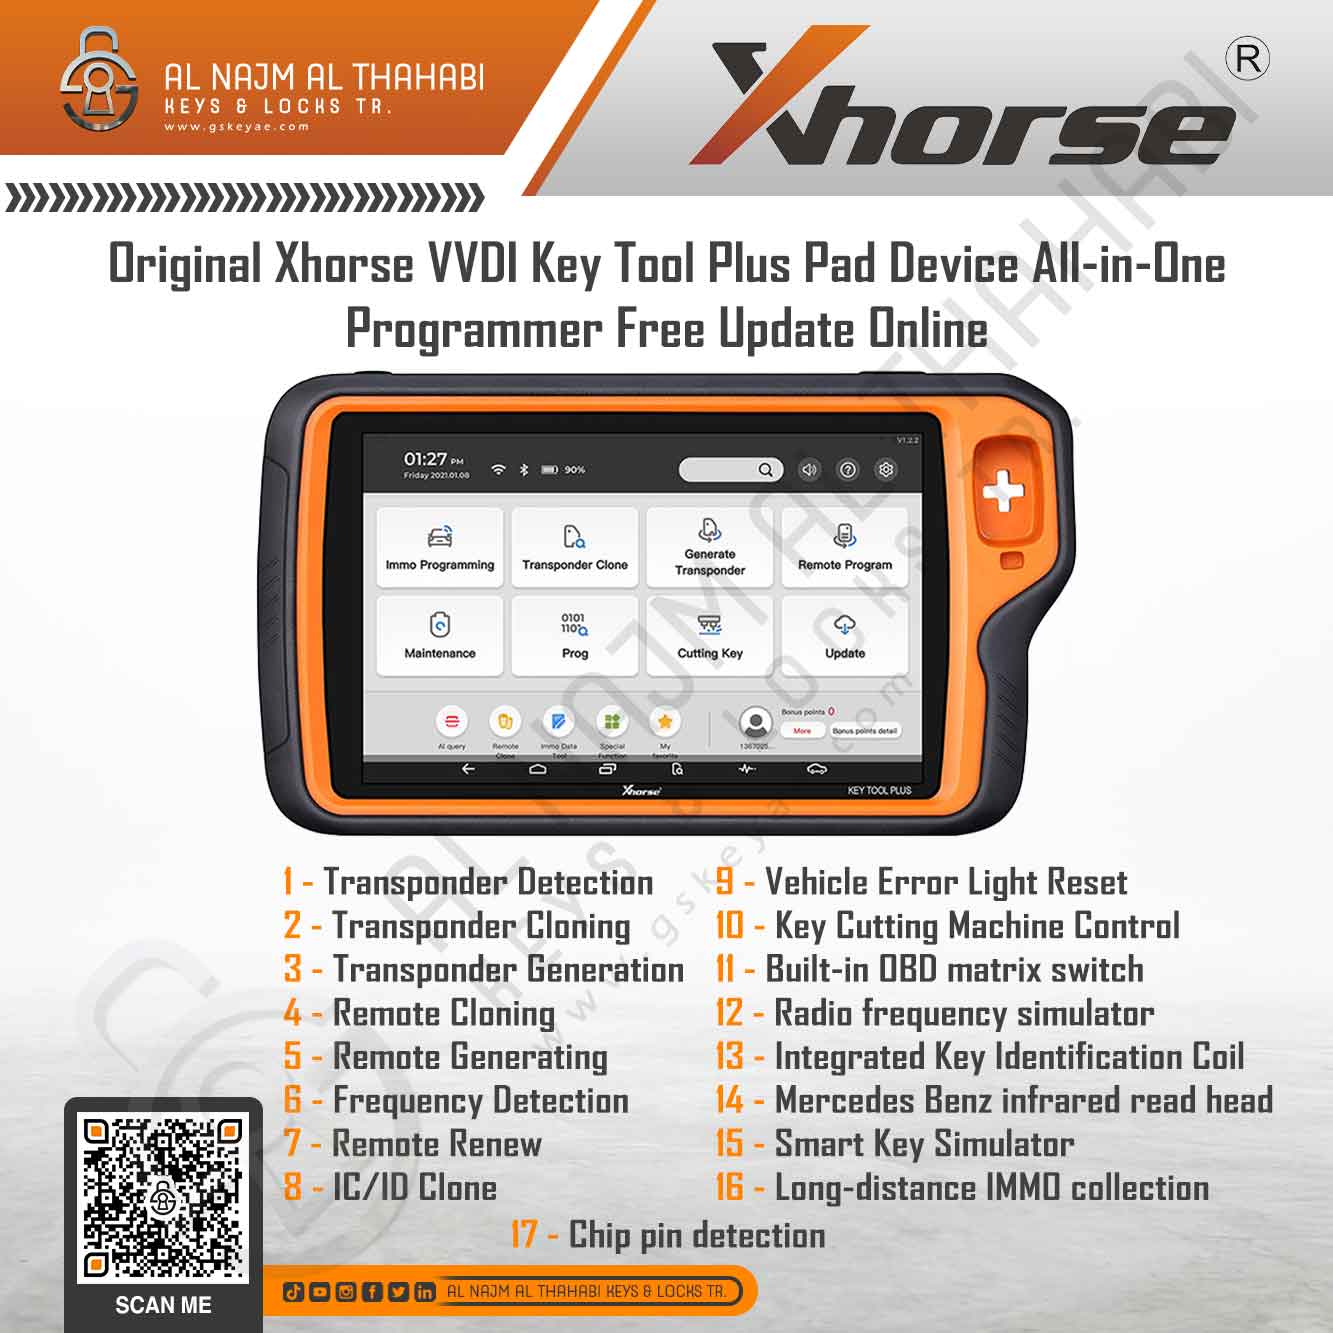 Xhorse VVDI Key Tool Plus Features